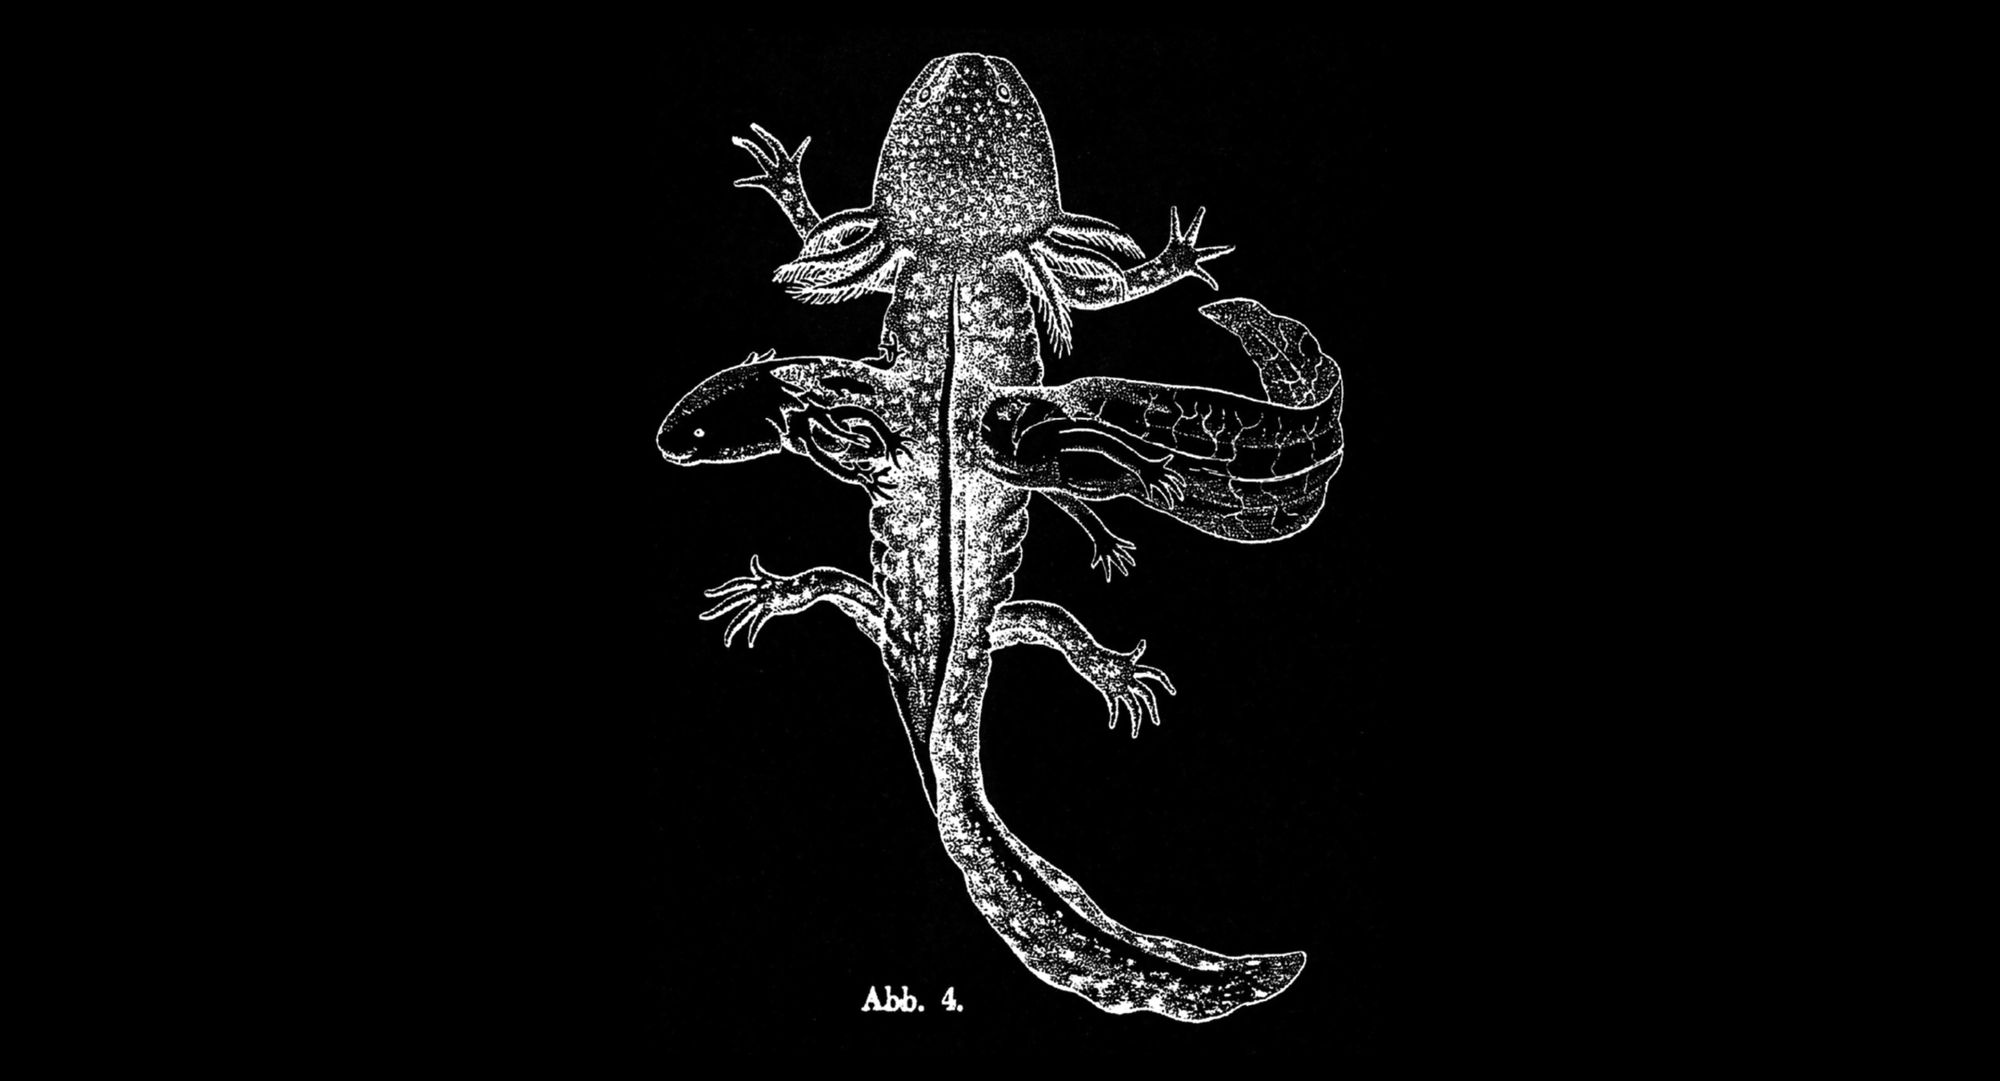 A scientific diagram of a salamander